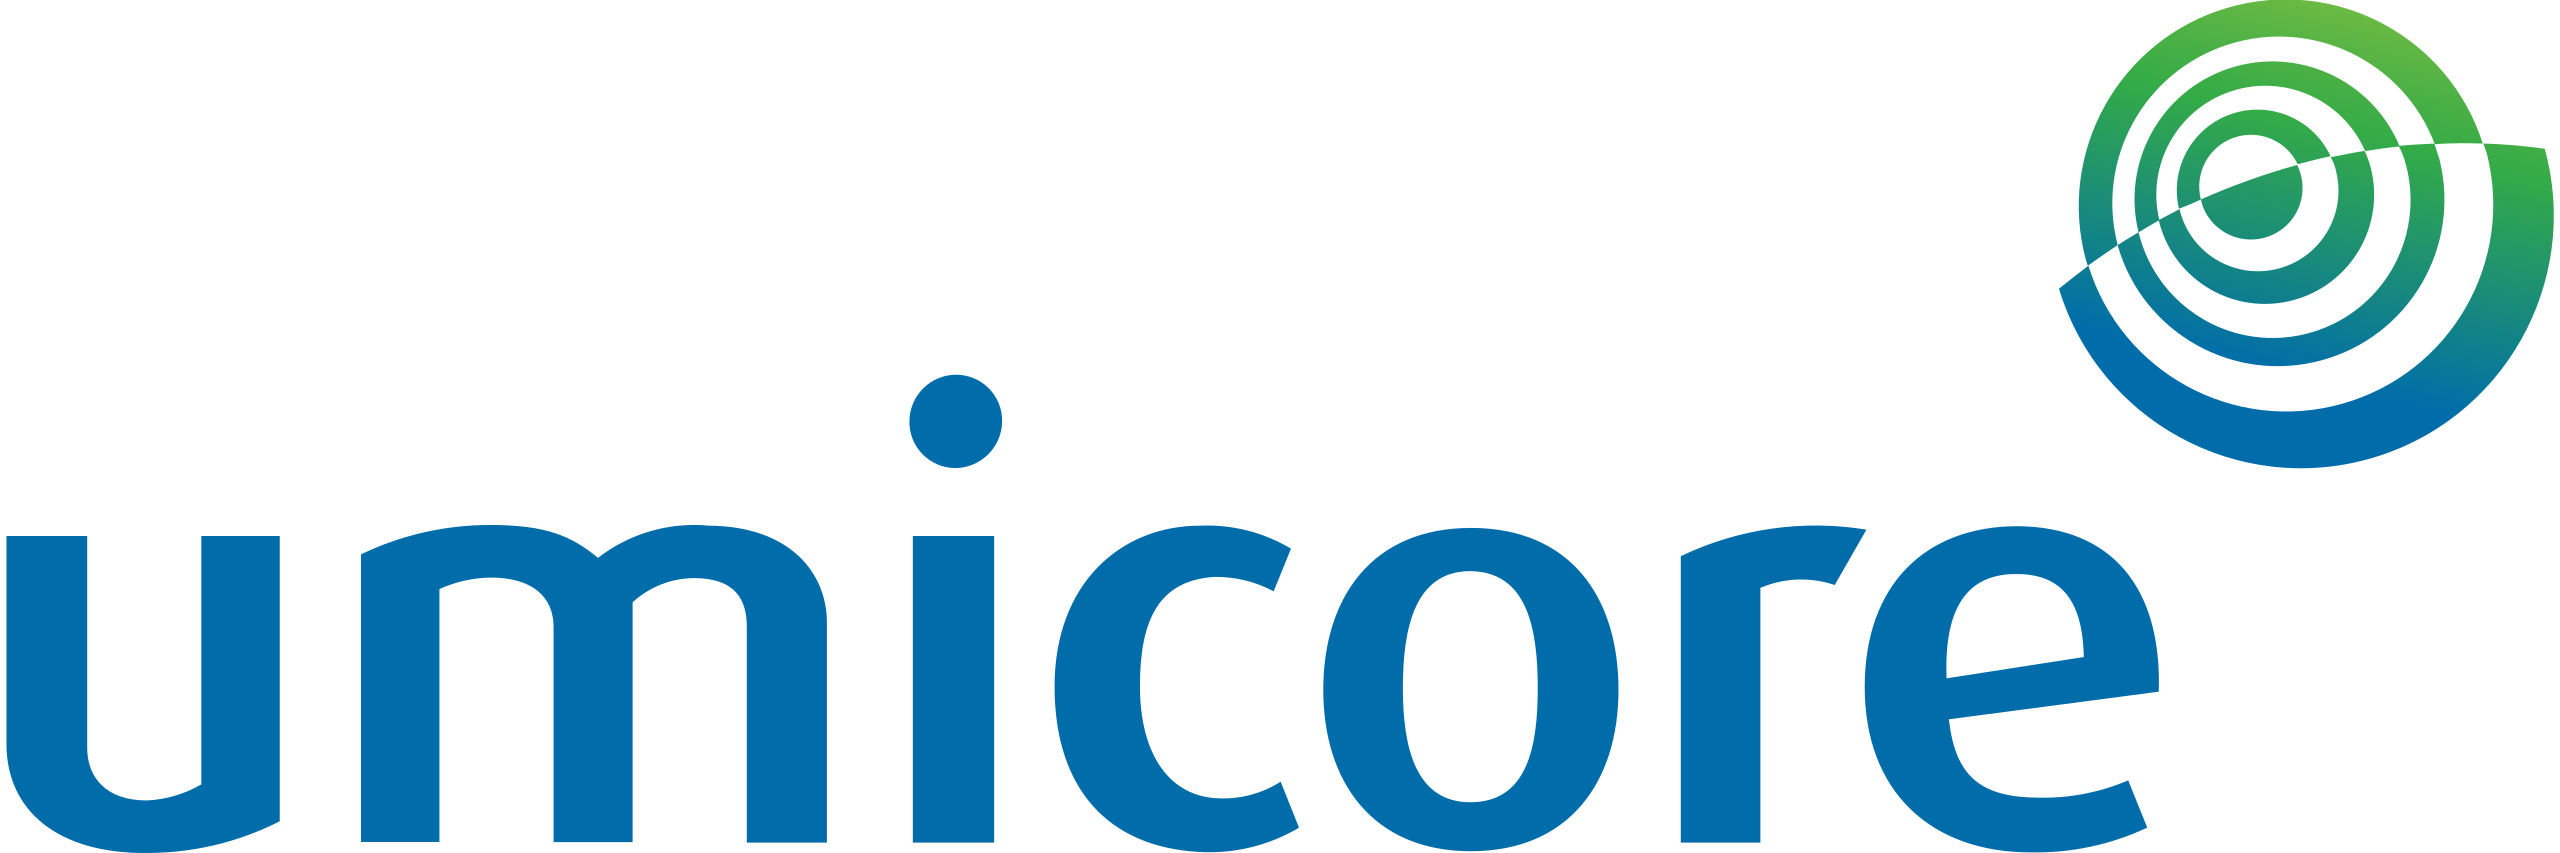 Umicore company logo